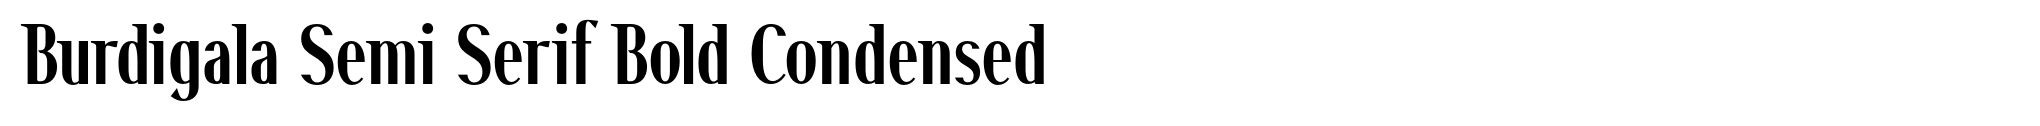 Burdigala Semi Serif Bold Condensed image